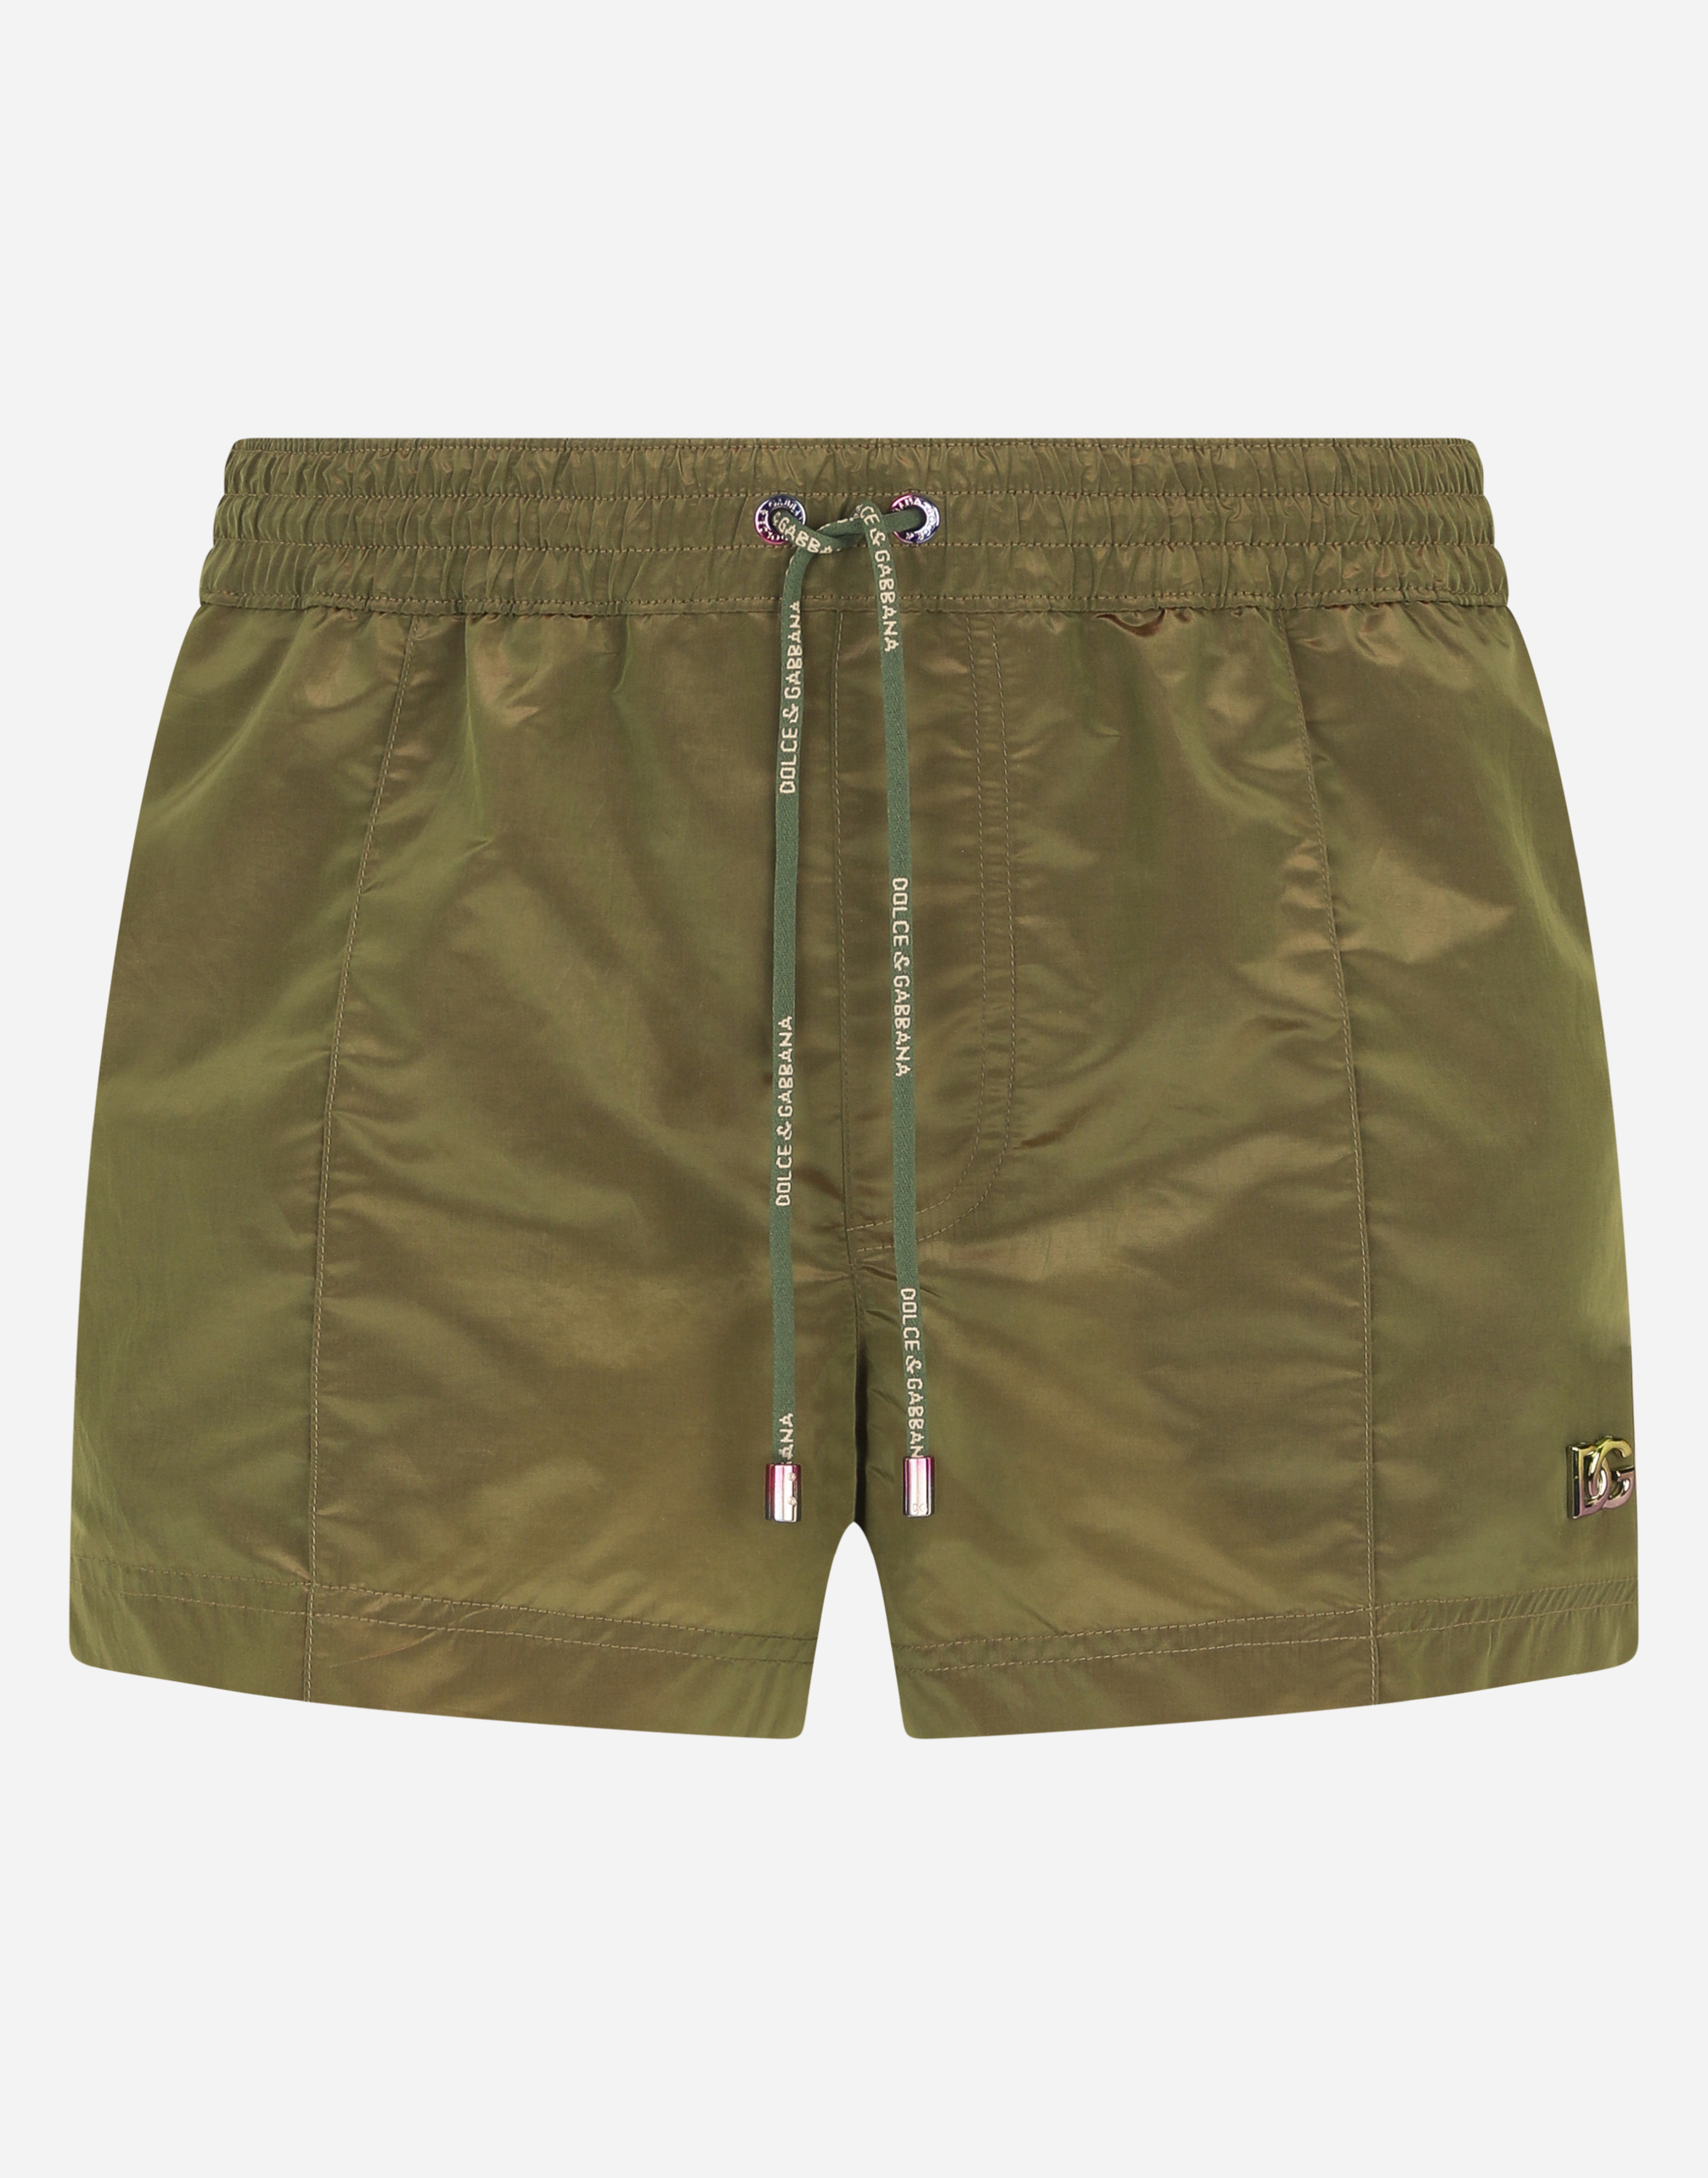 Short iridescent fabric swim trunks with DG logo in Green